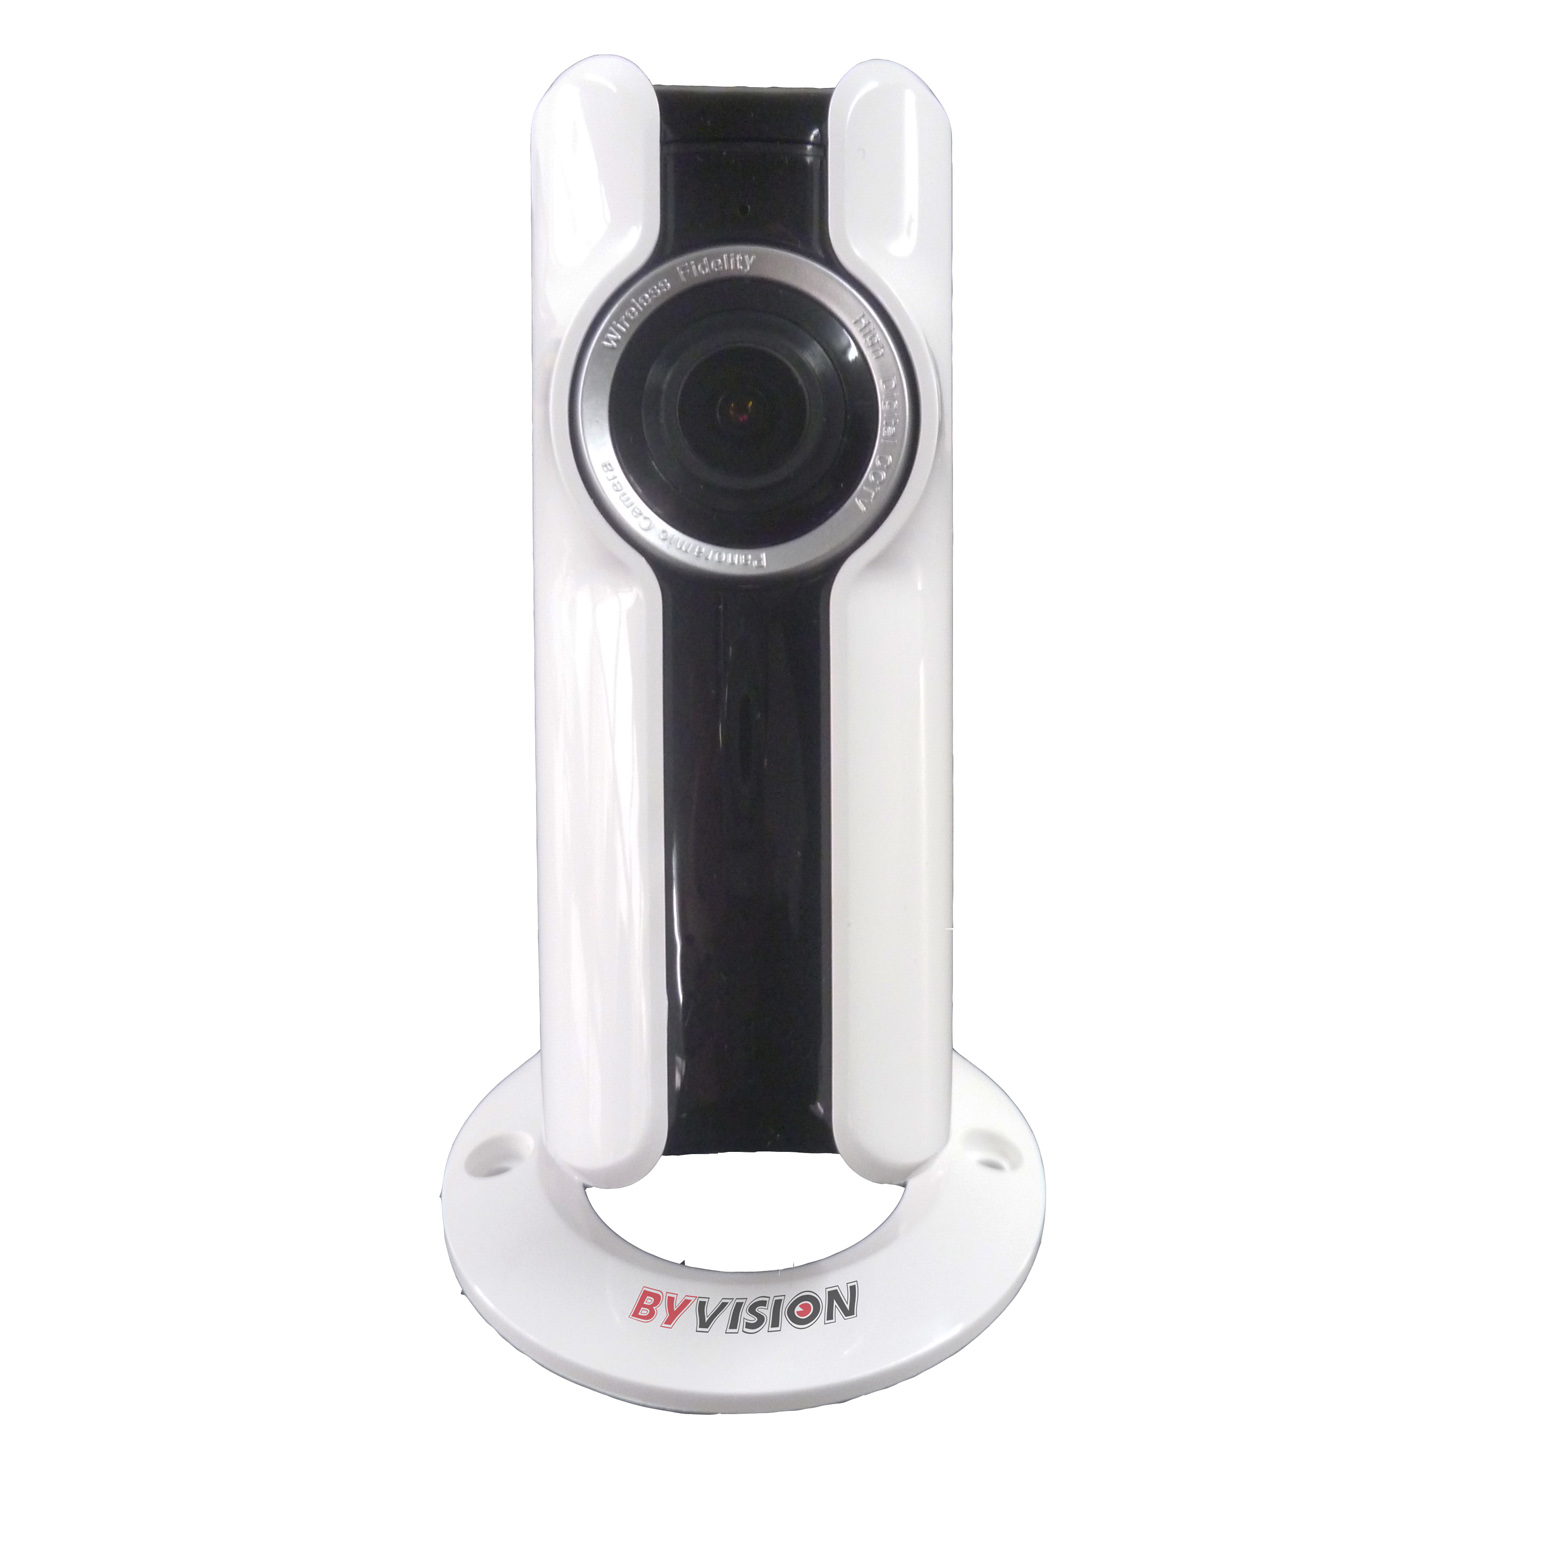 New Fisheye Wireless IP VR Camera On Amazon